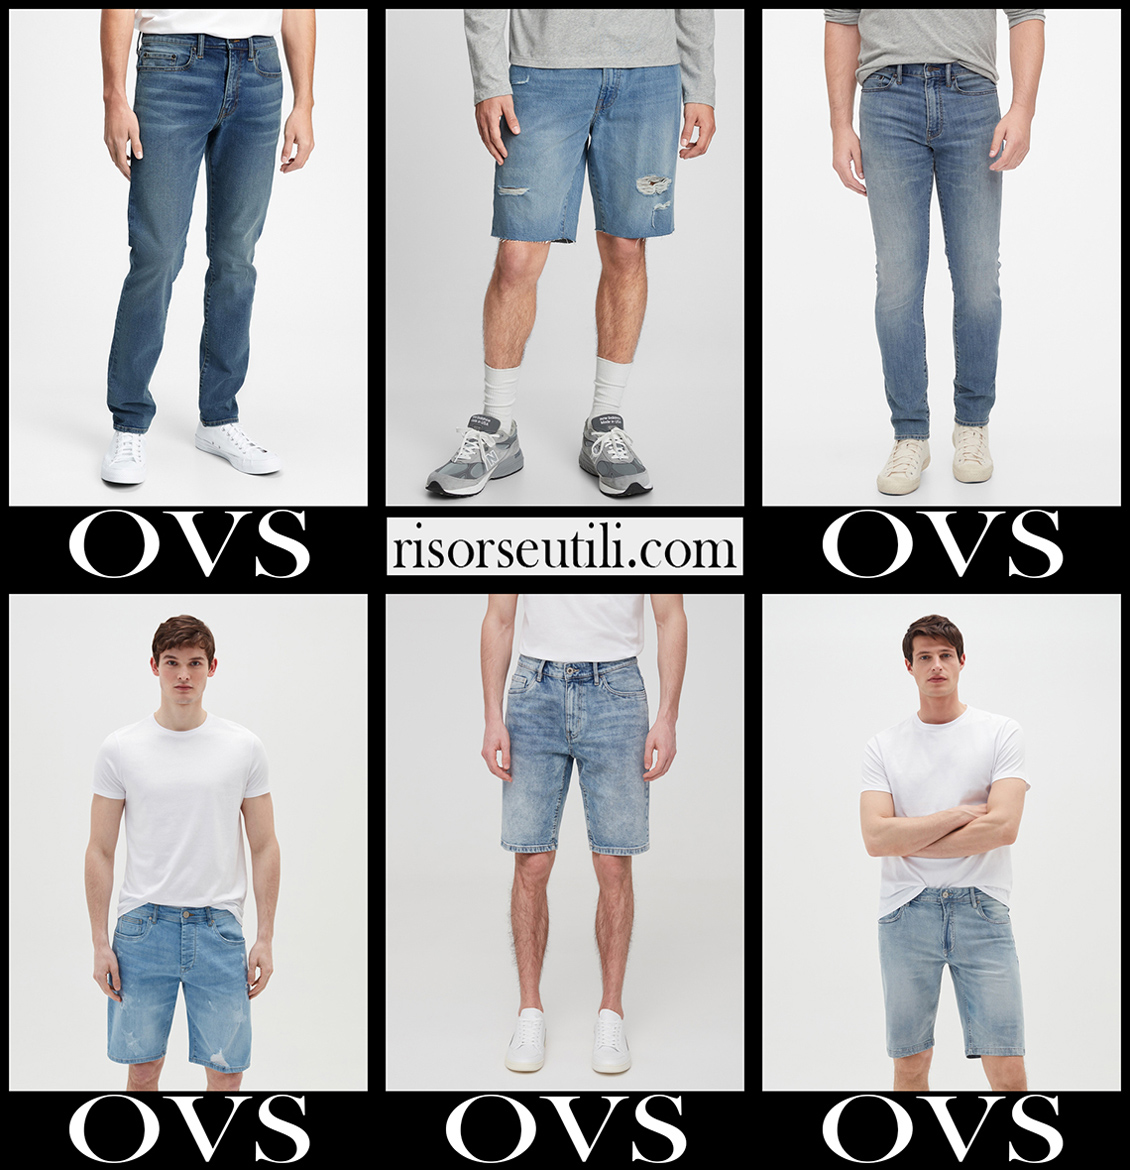 New arrivals OVS jeans 2021 mens fashion denim